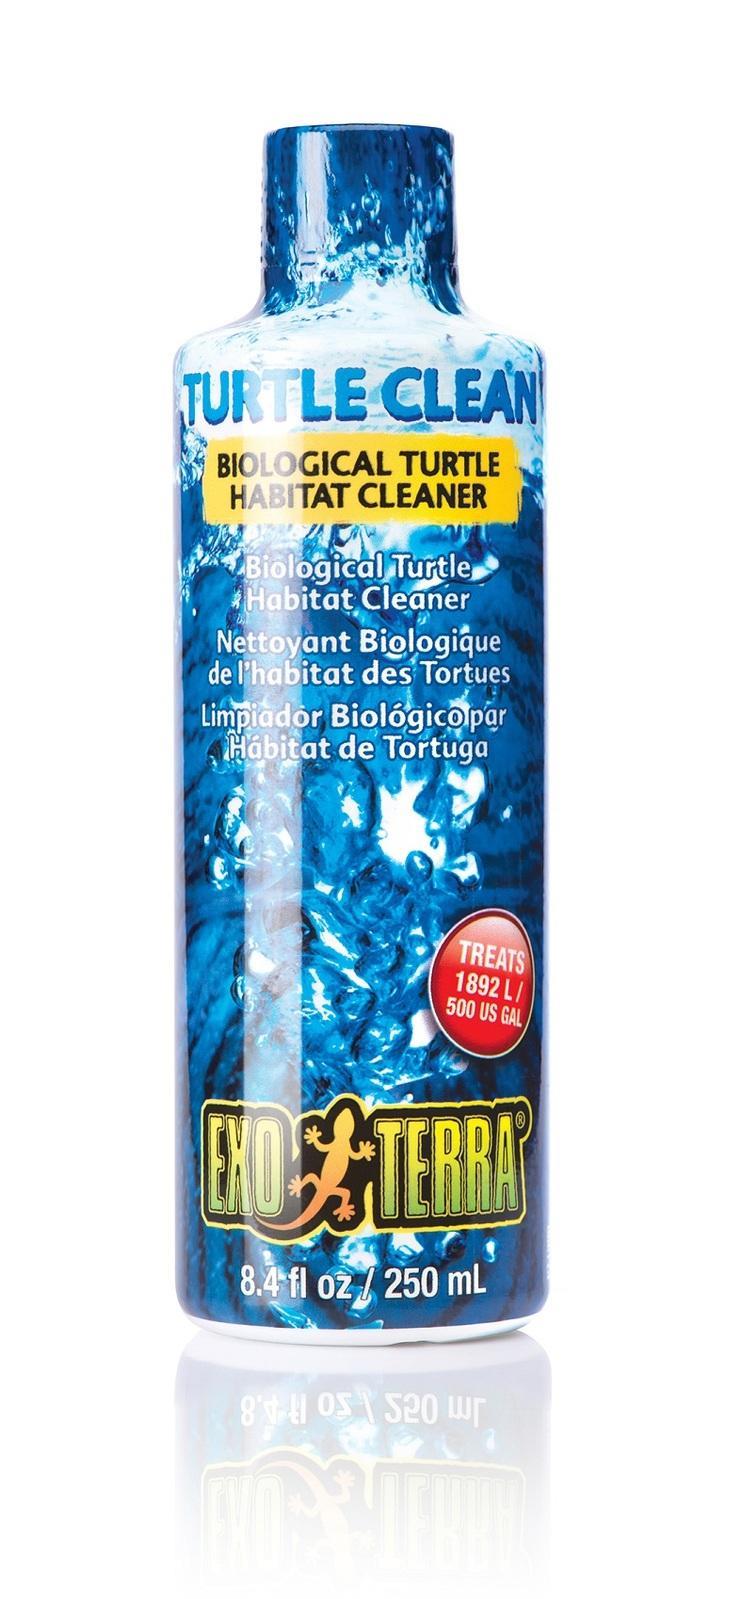 Turtle Clean 250ml Biological Turtle Habitat Cleaner by Exo Terra